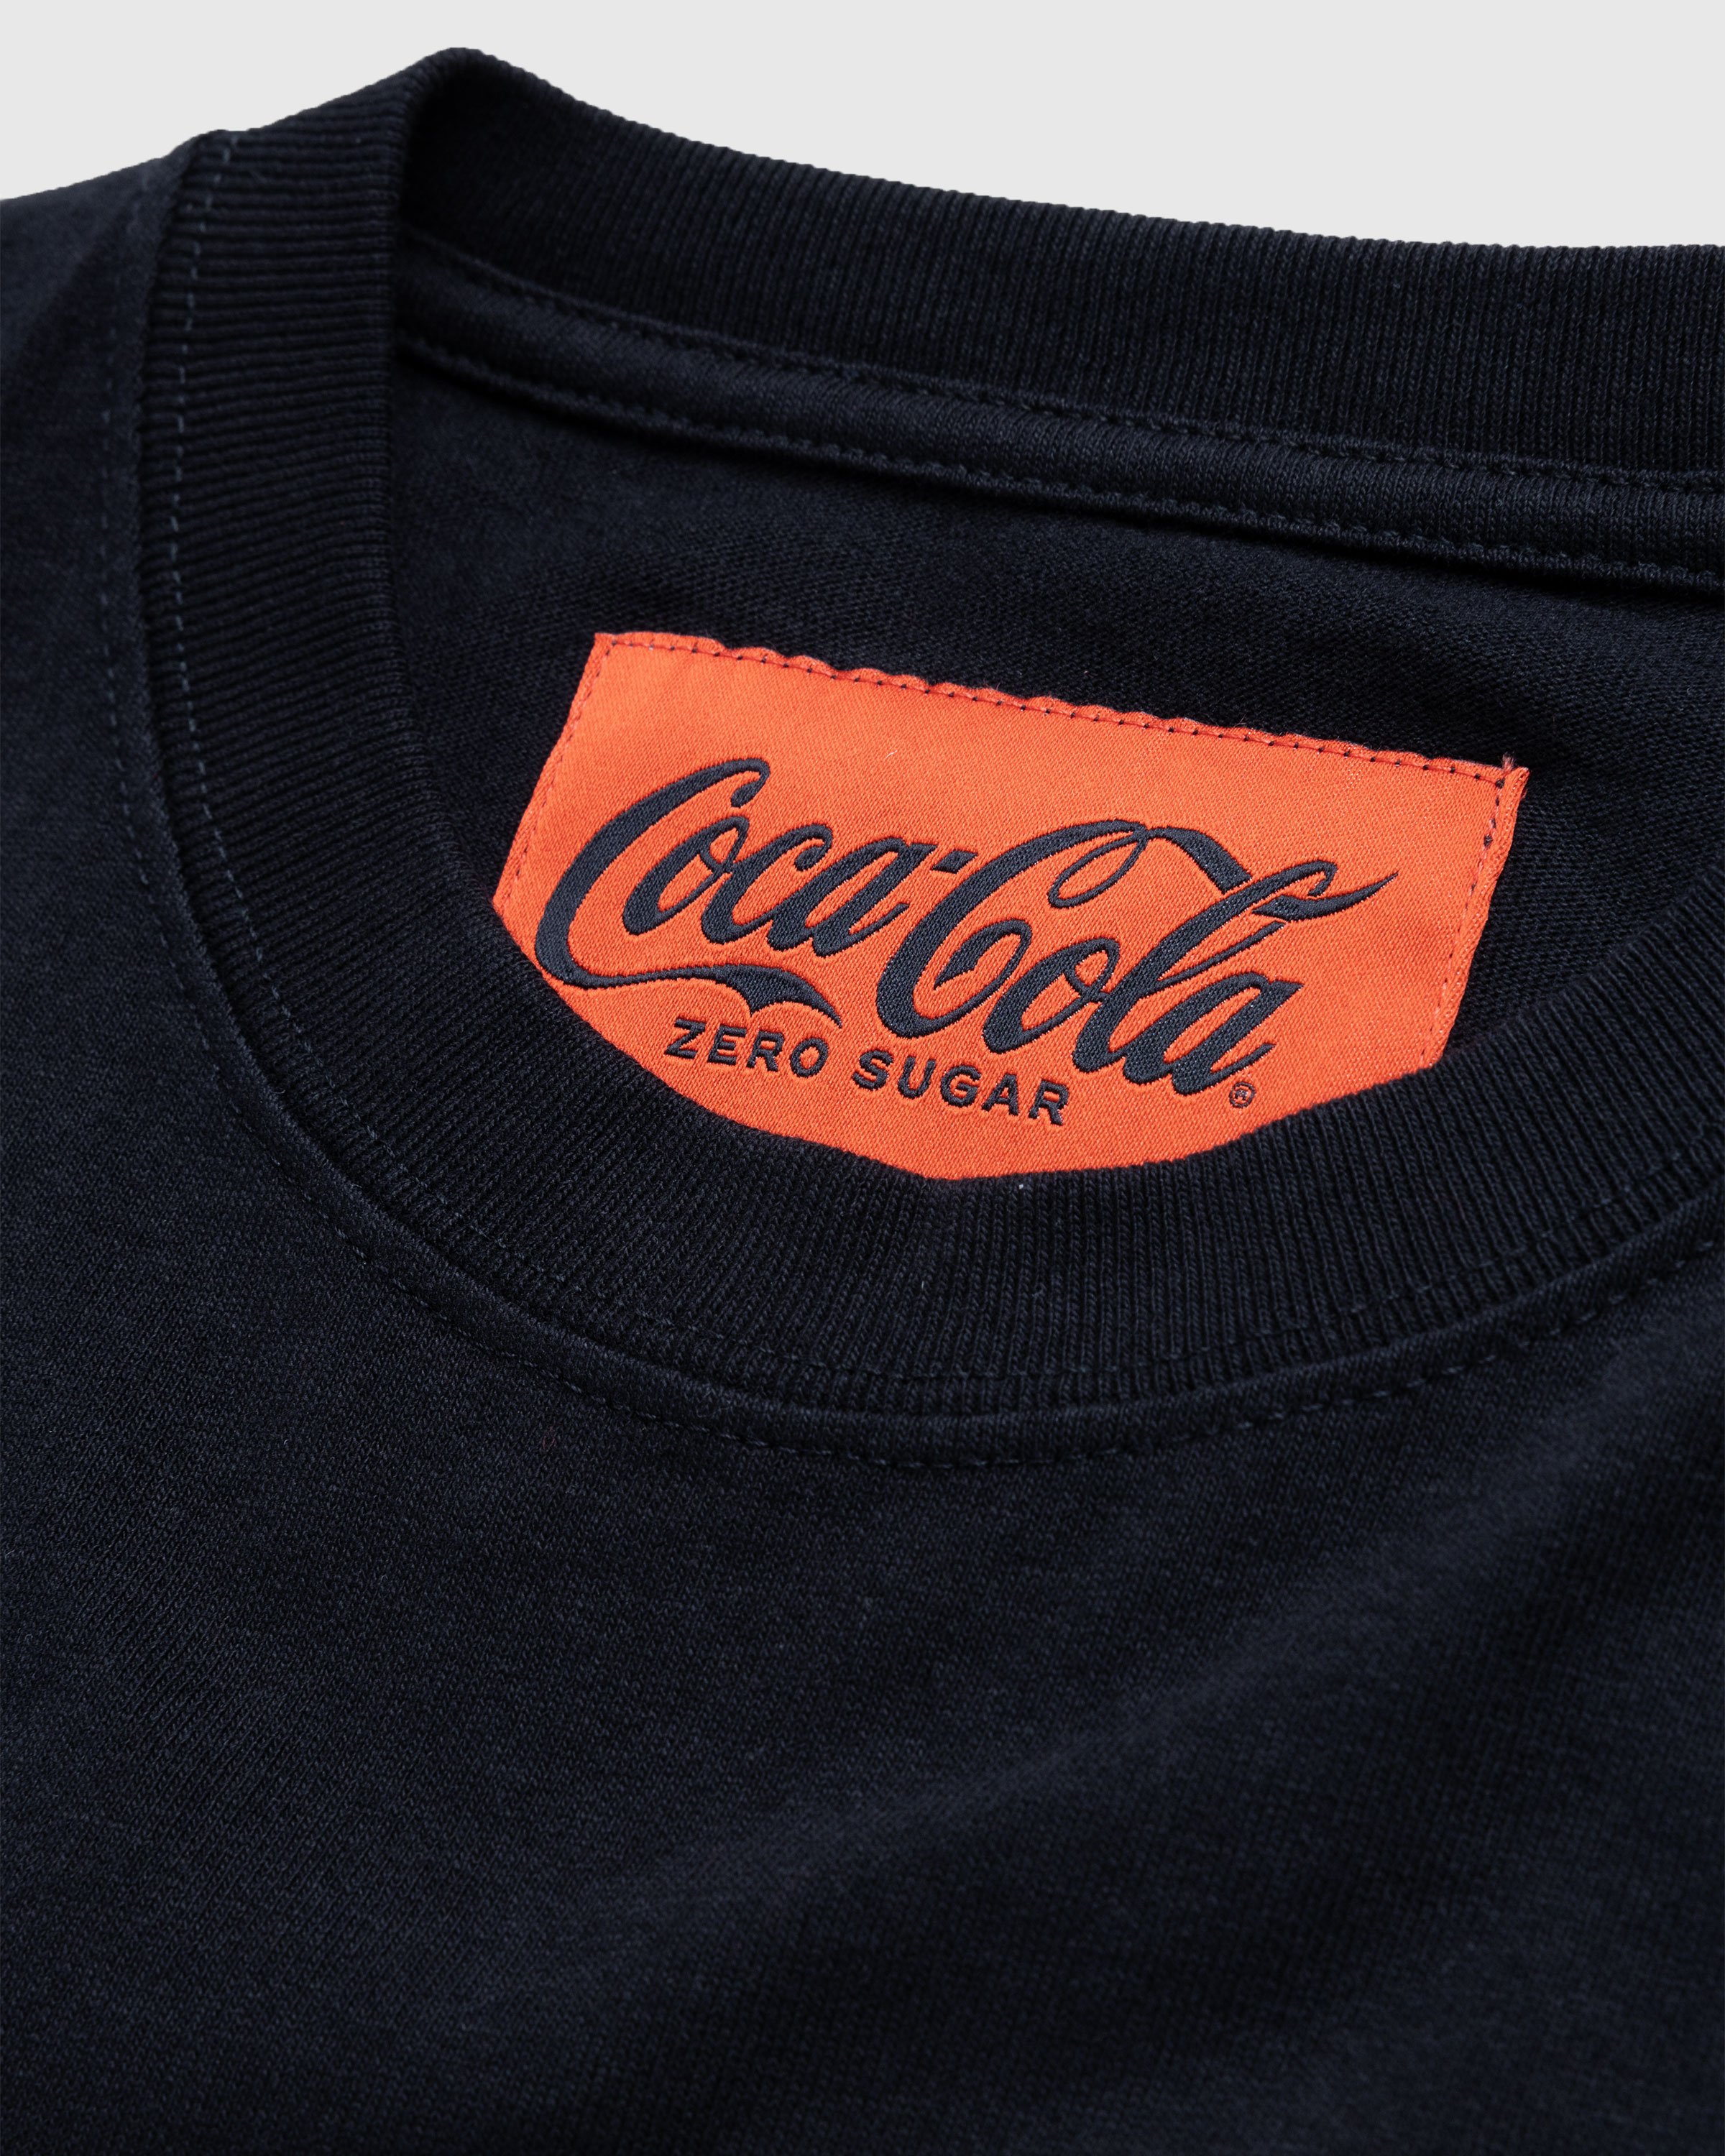 Highsnobiety x Coca-Cola Zero Sugar - Short Sleeve T-Shirt Black - Clothing - Black - Image 7